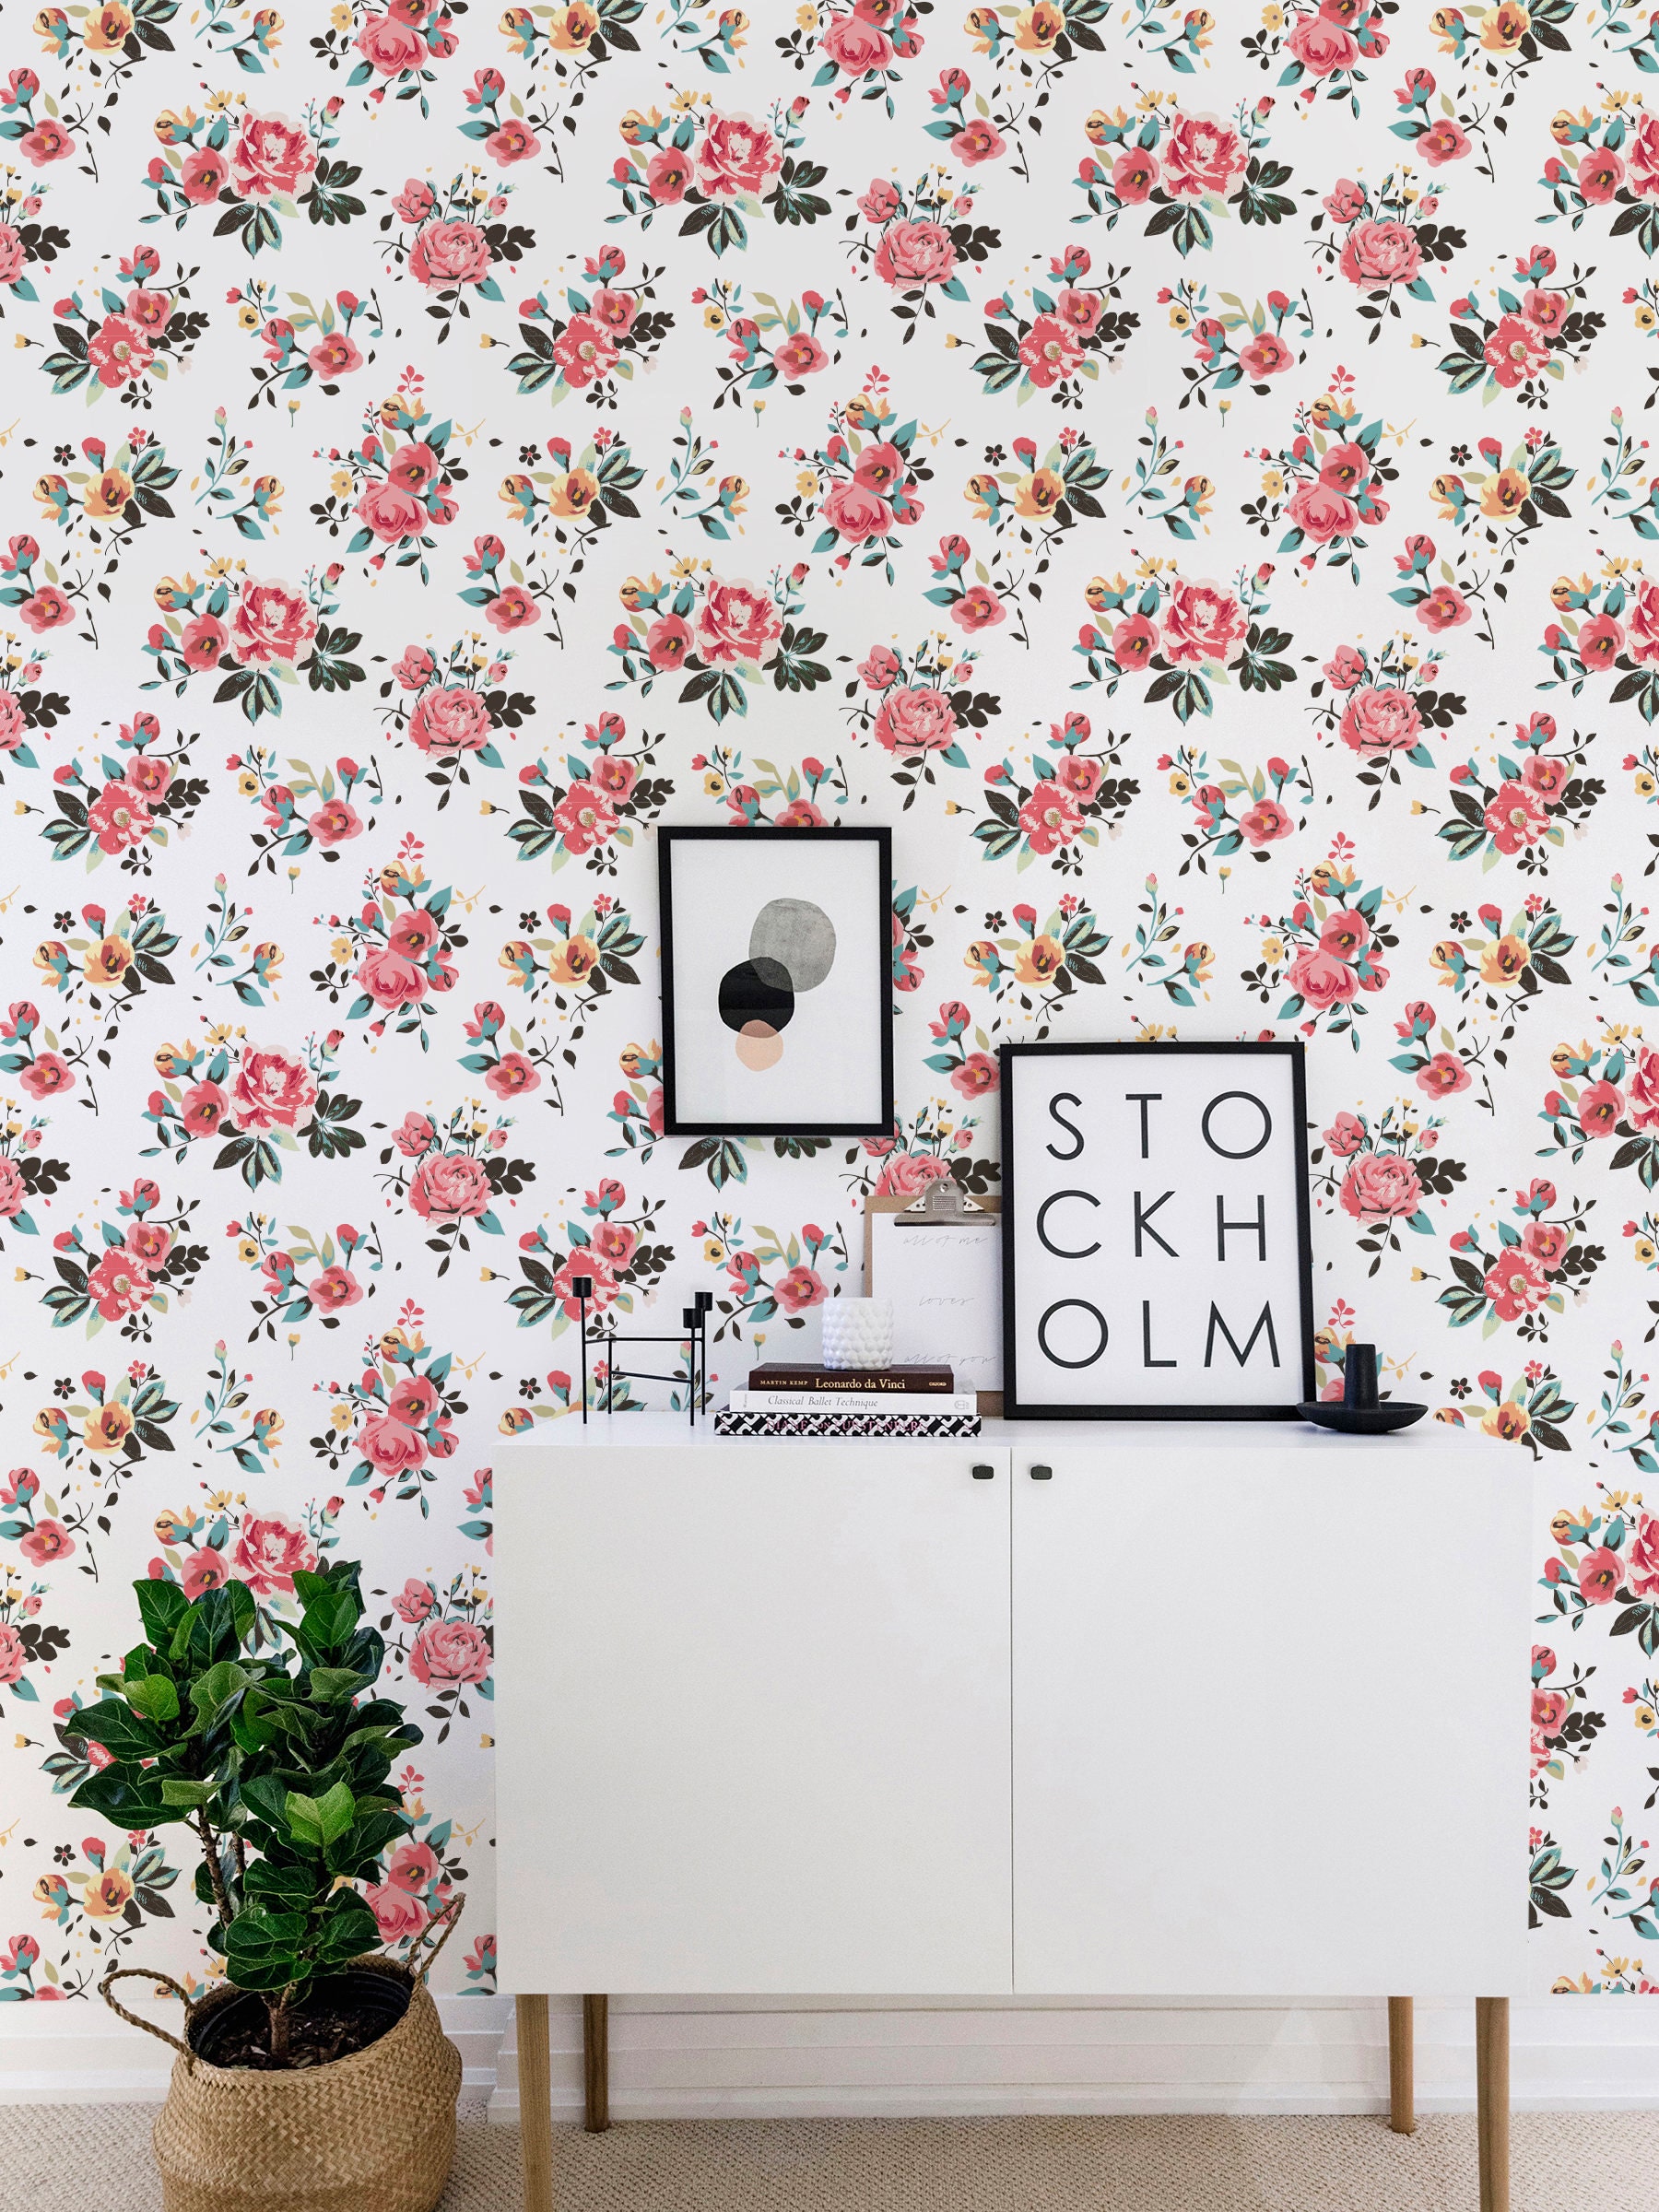 Floral Self adhesive vinyl wallpaper Flower pattern print | Etsy